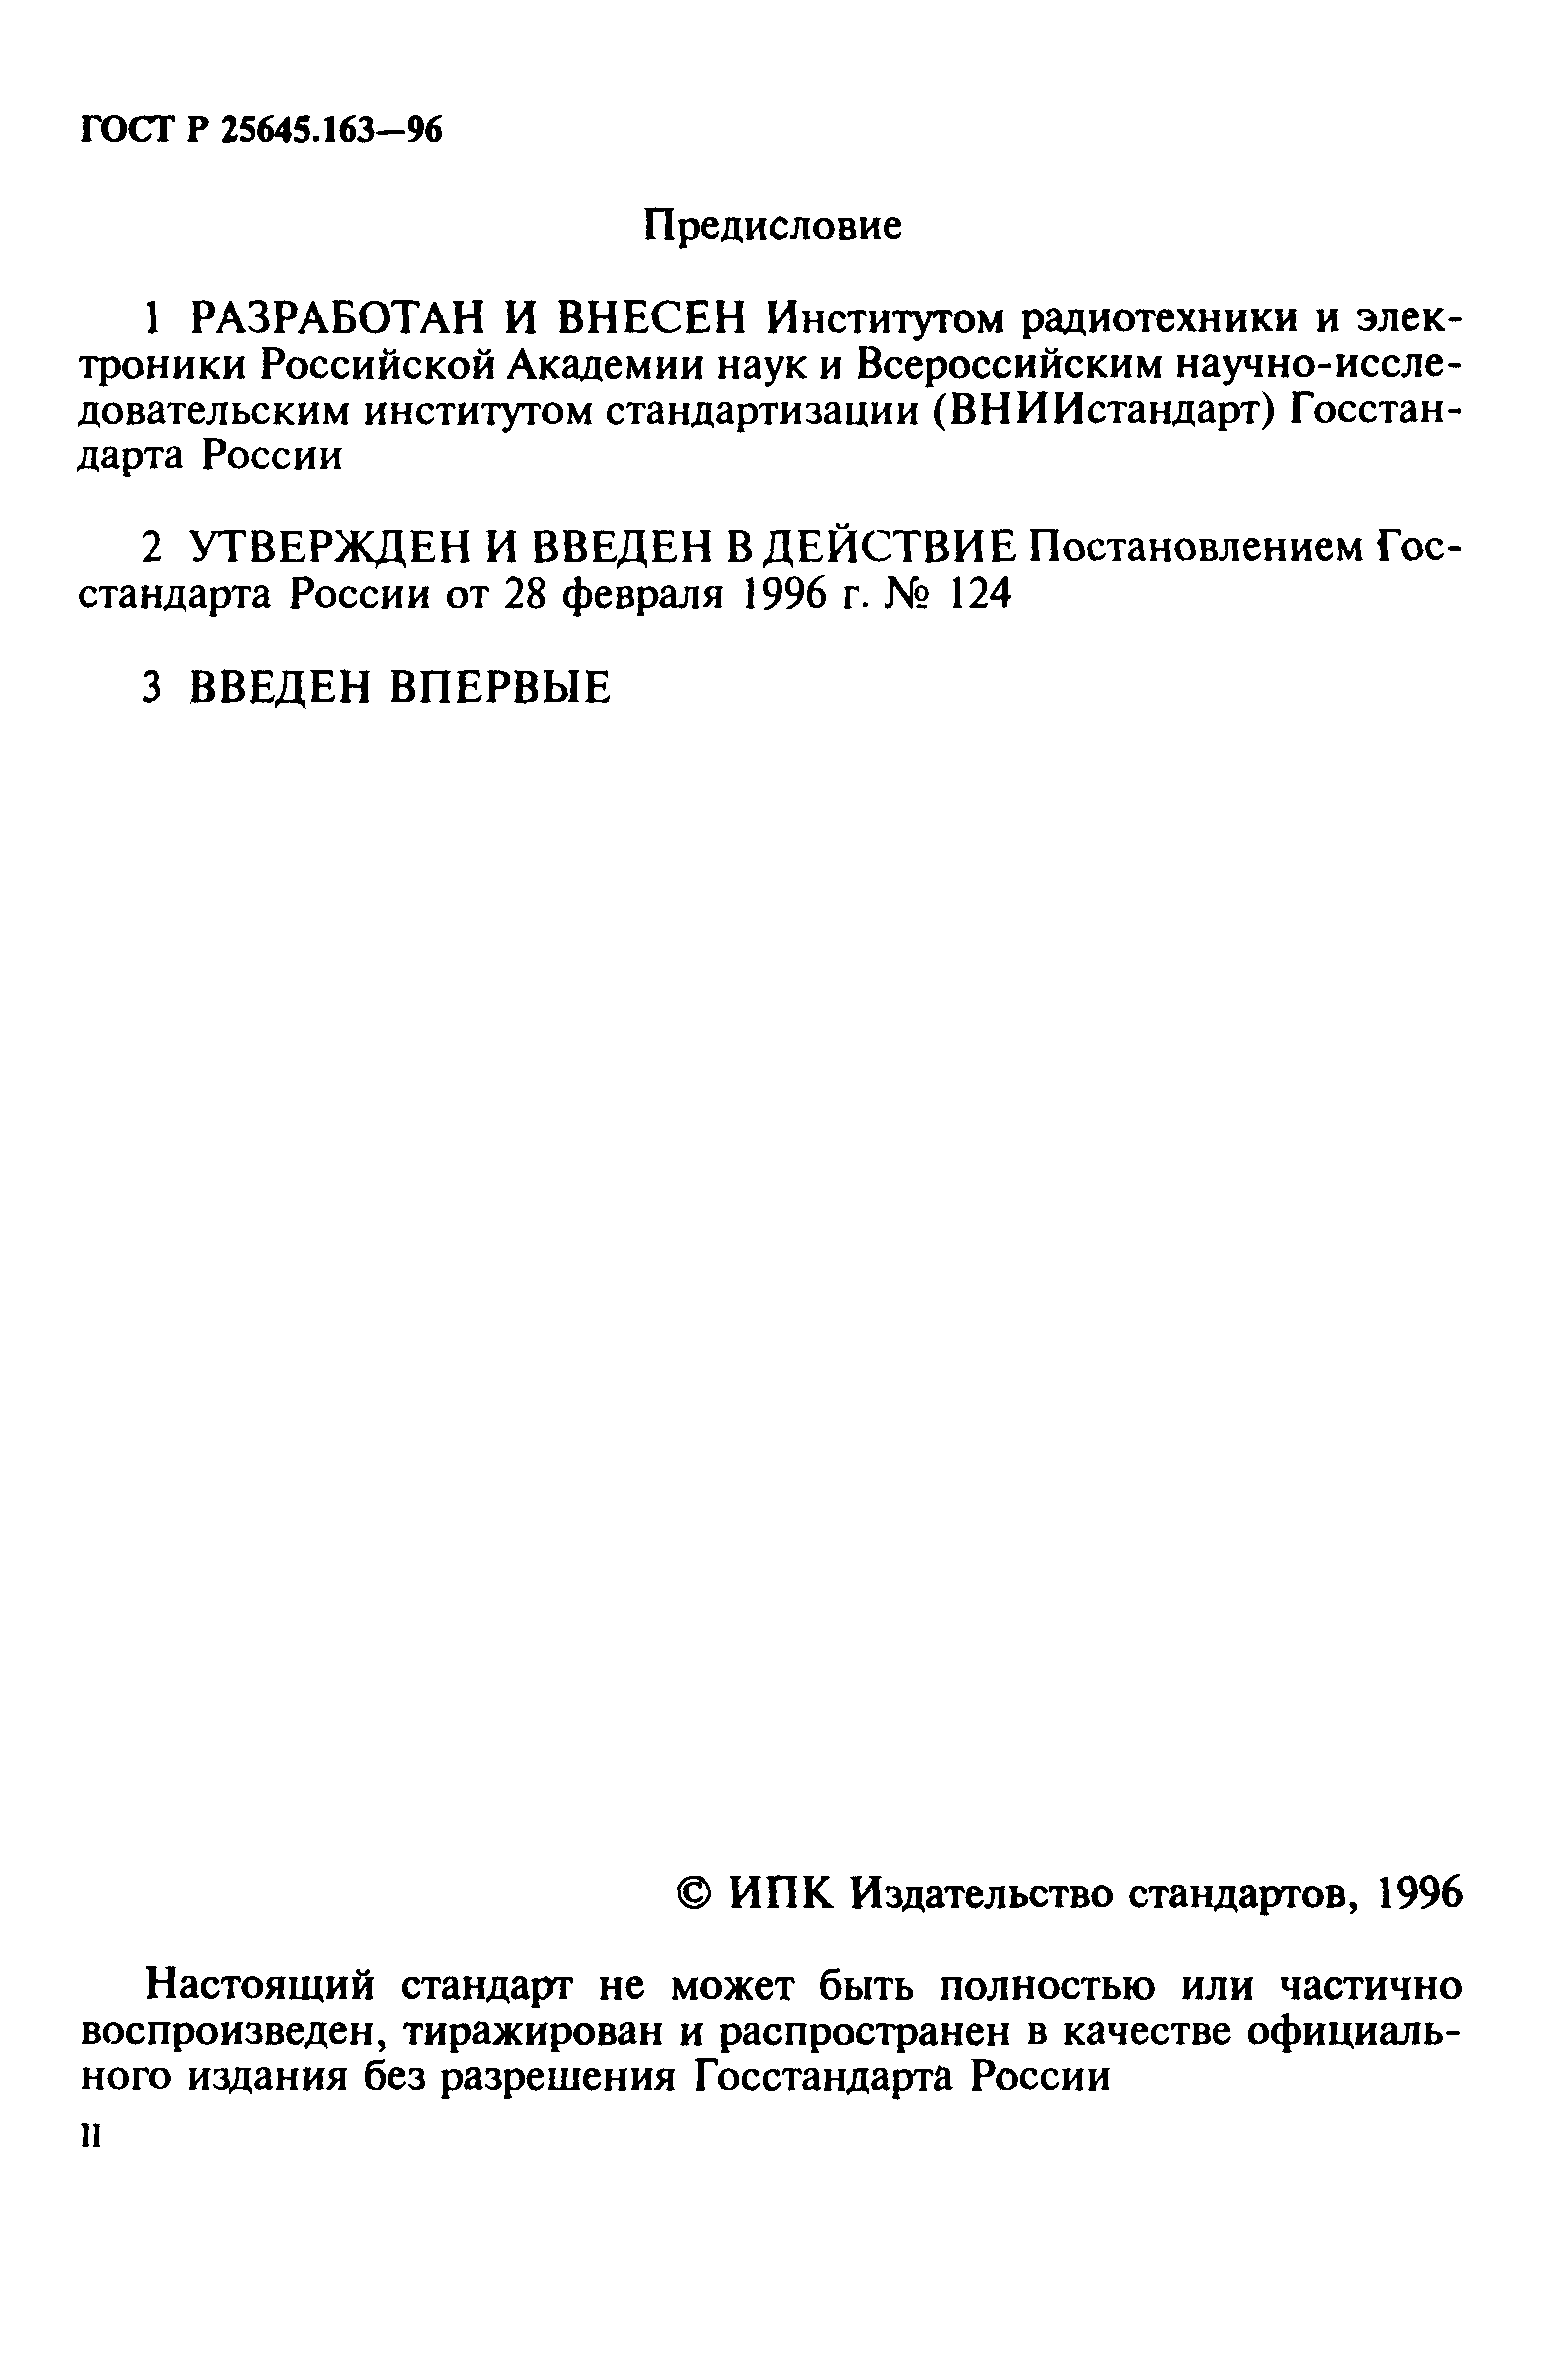 ГОСТ Р 25645.163-96